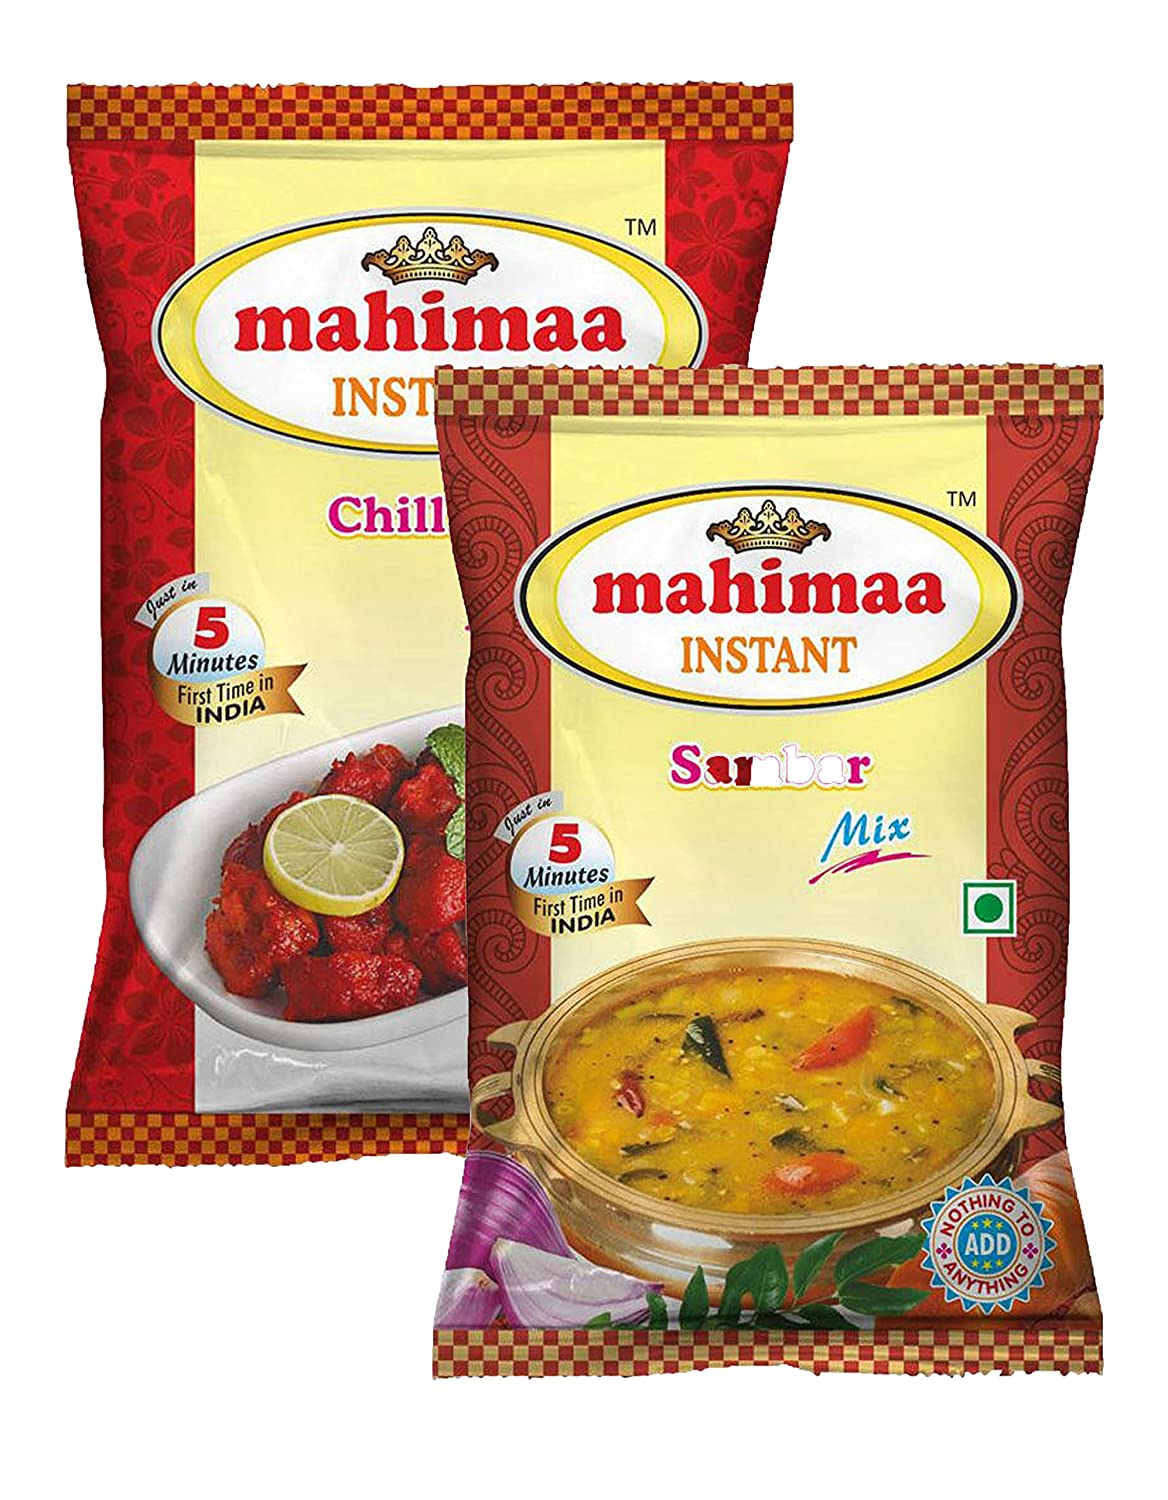 Mahimaa Instant Chilli 65 Mix, Sambar Mix, Size- 50g, Pack of 2